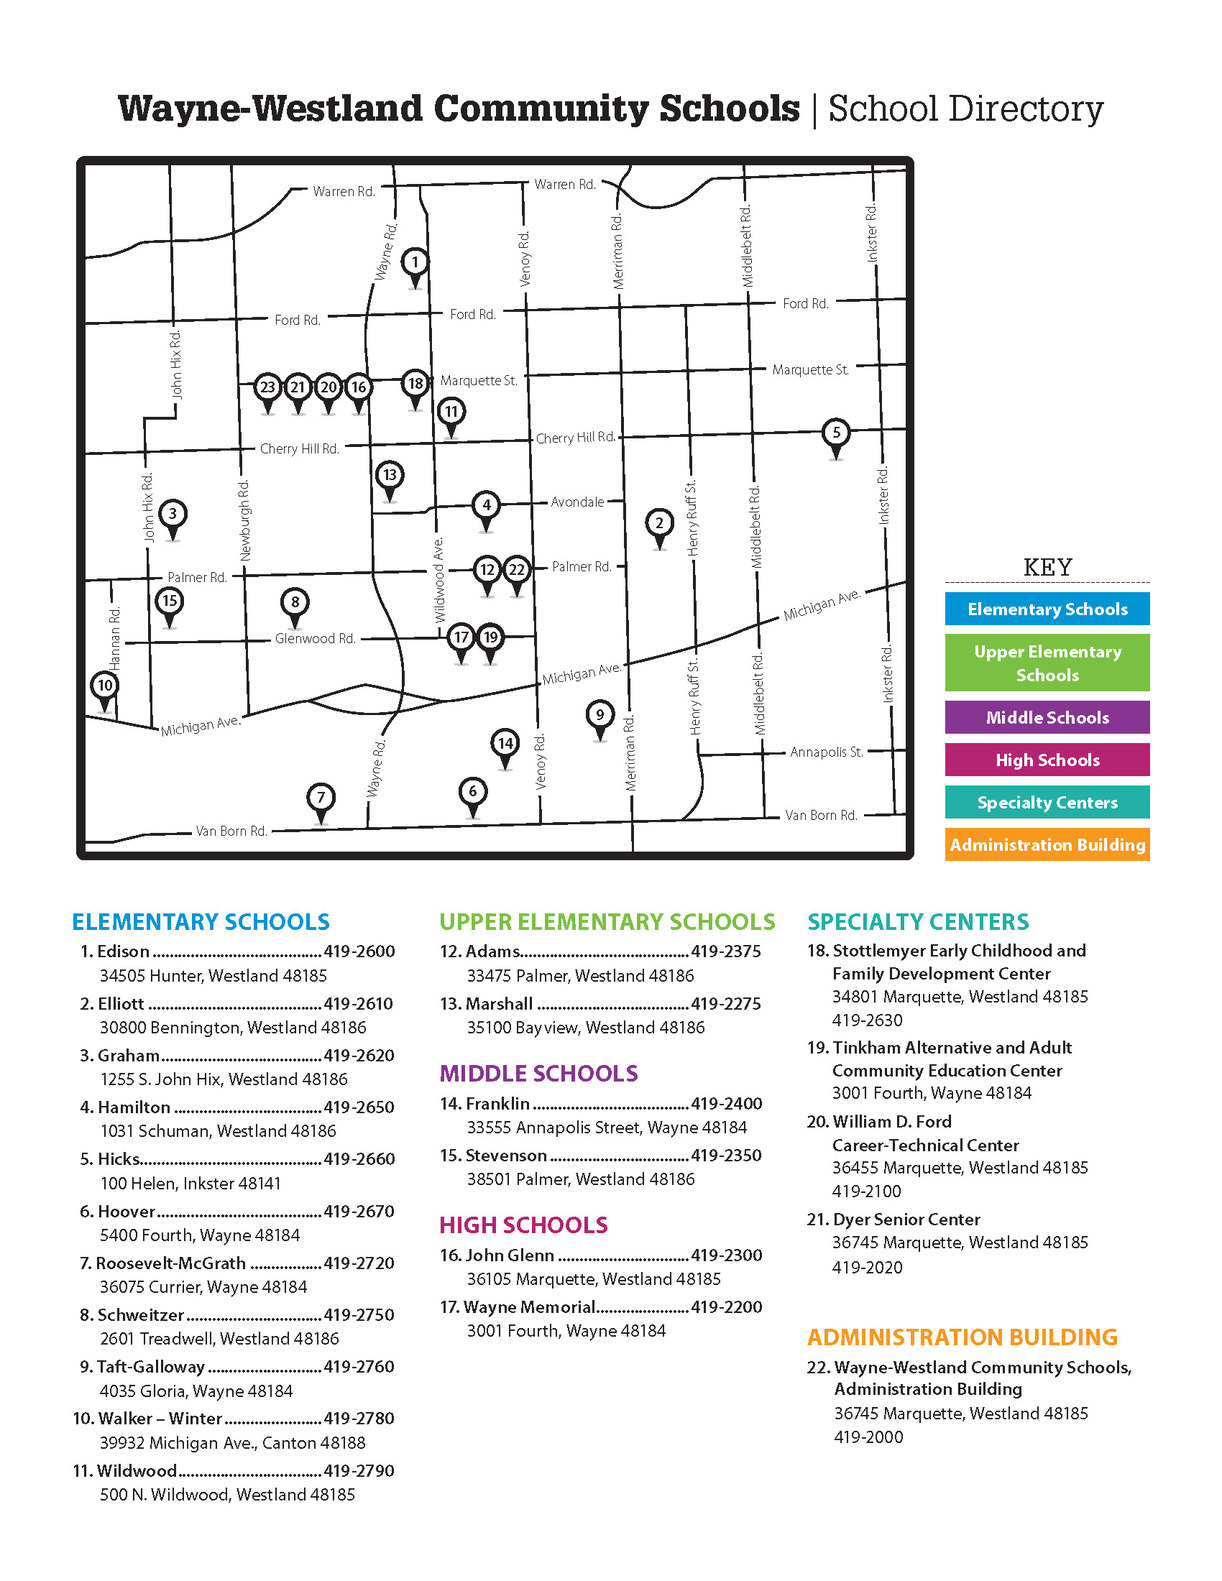 School Directory Map 2016-17